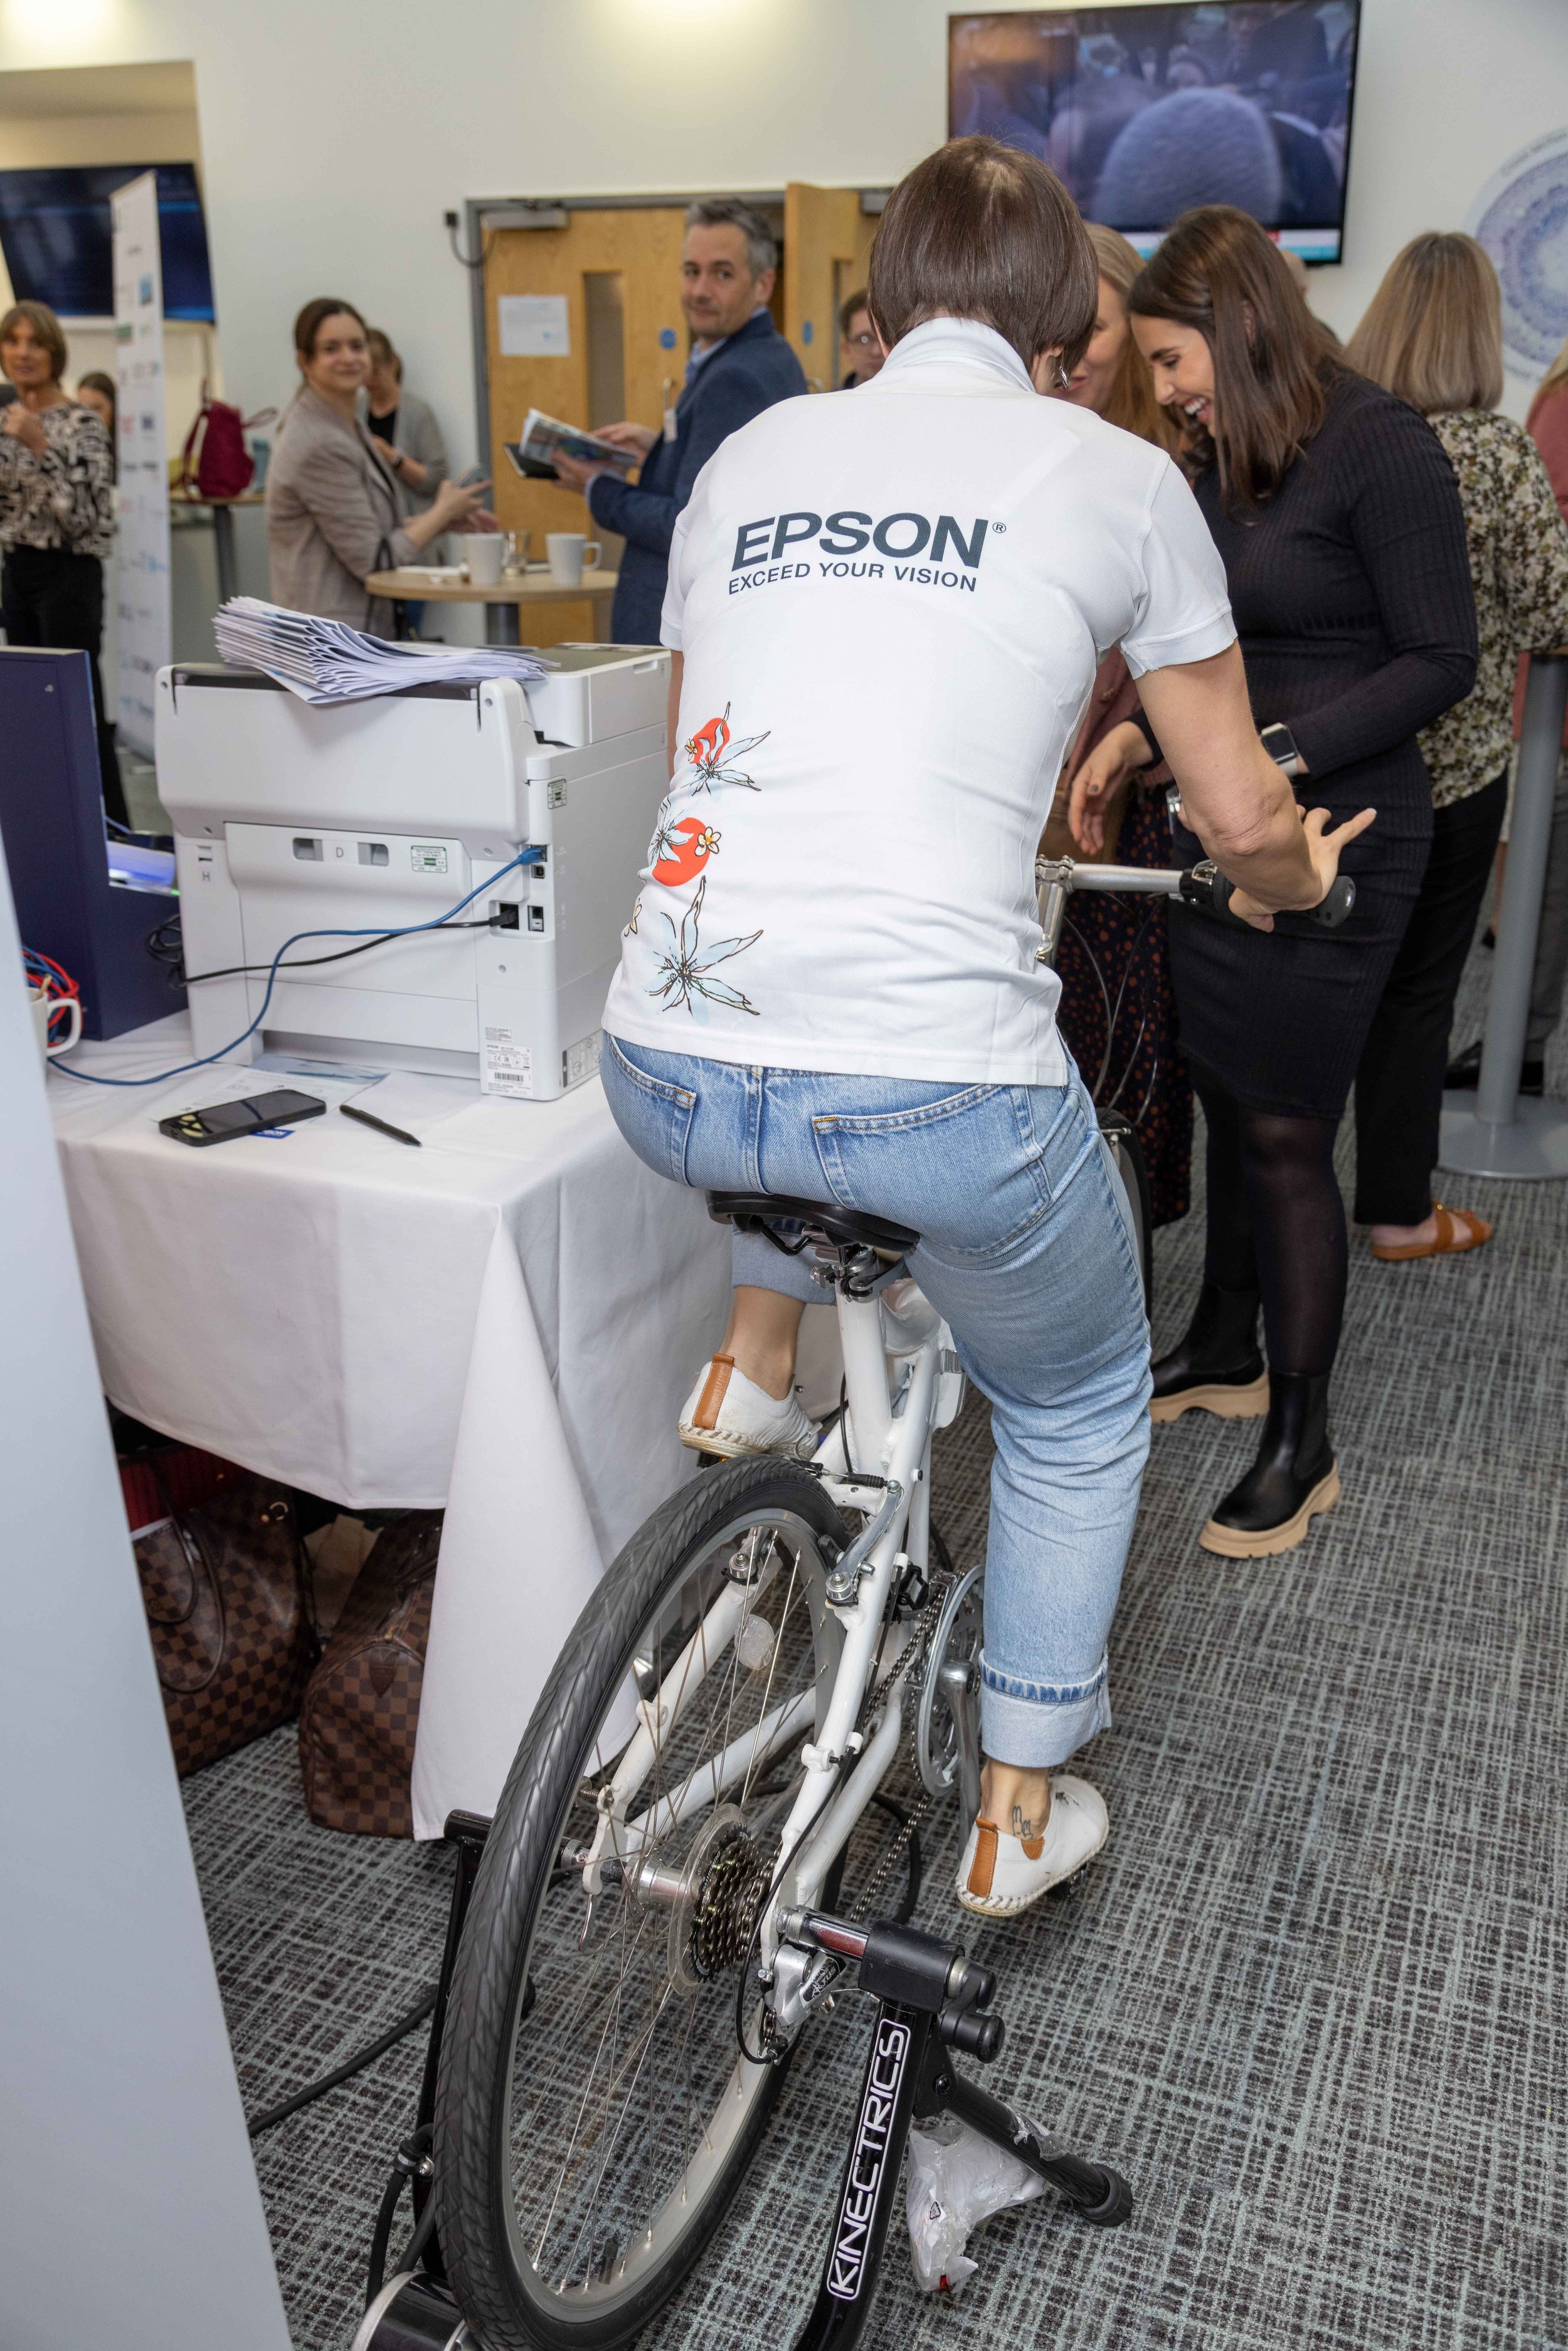 epson - riding a bike.jpg